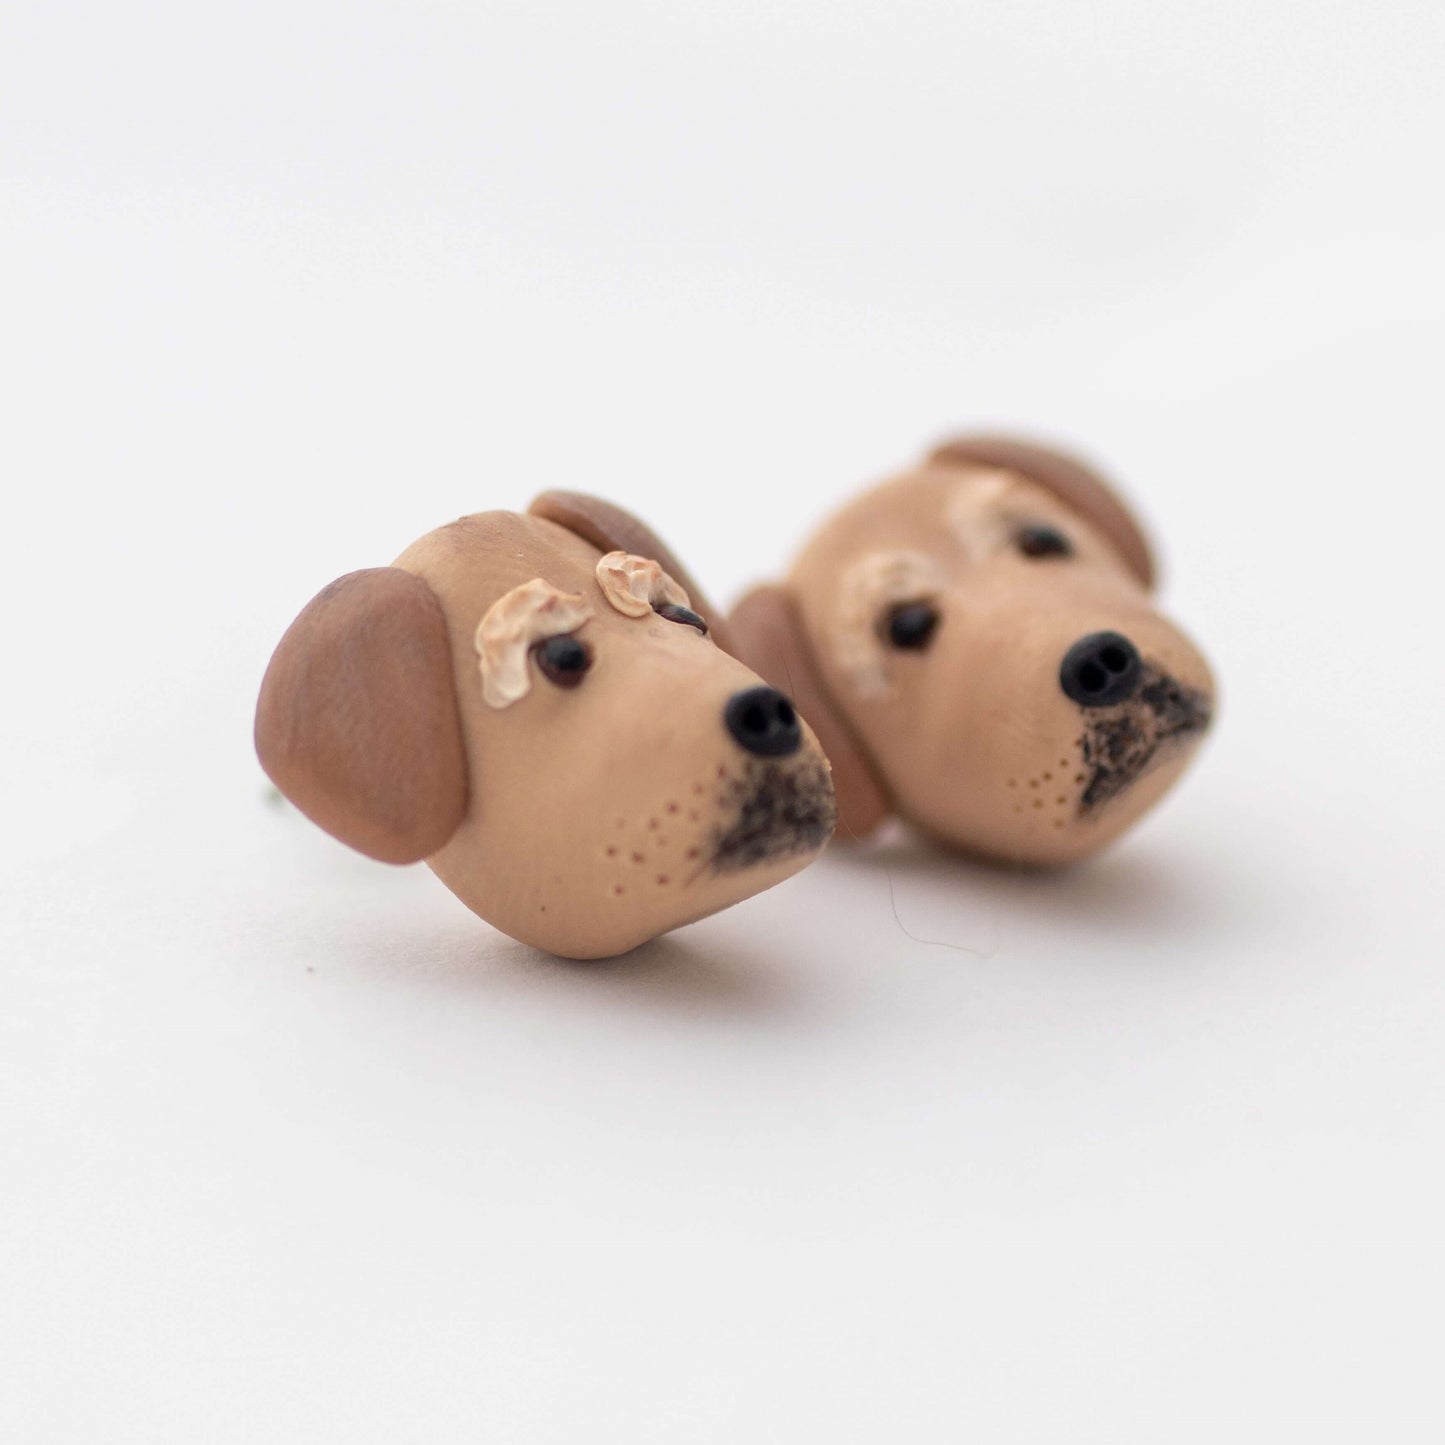 Handmade polymer clay golden retriever dog stud earrings on white background